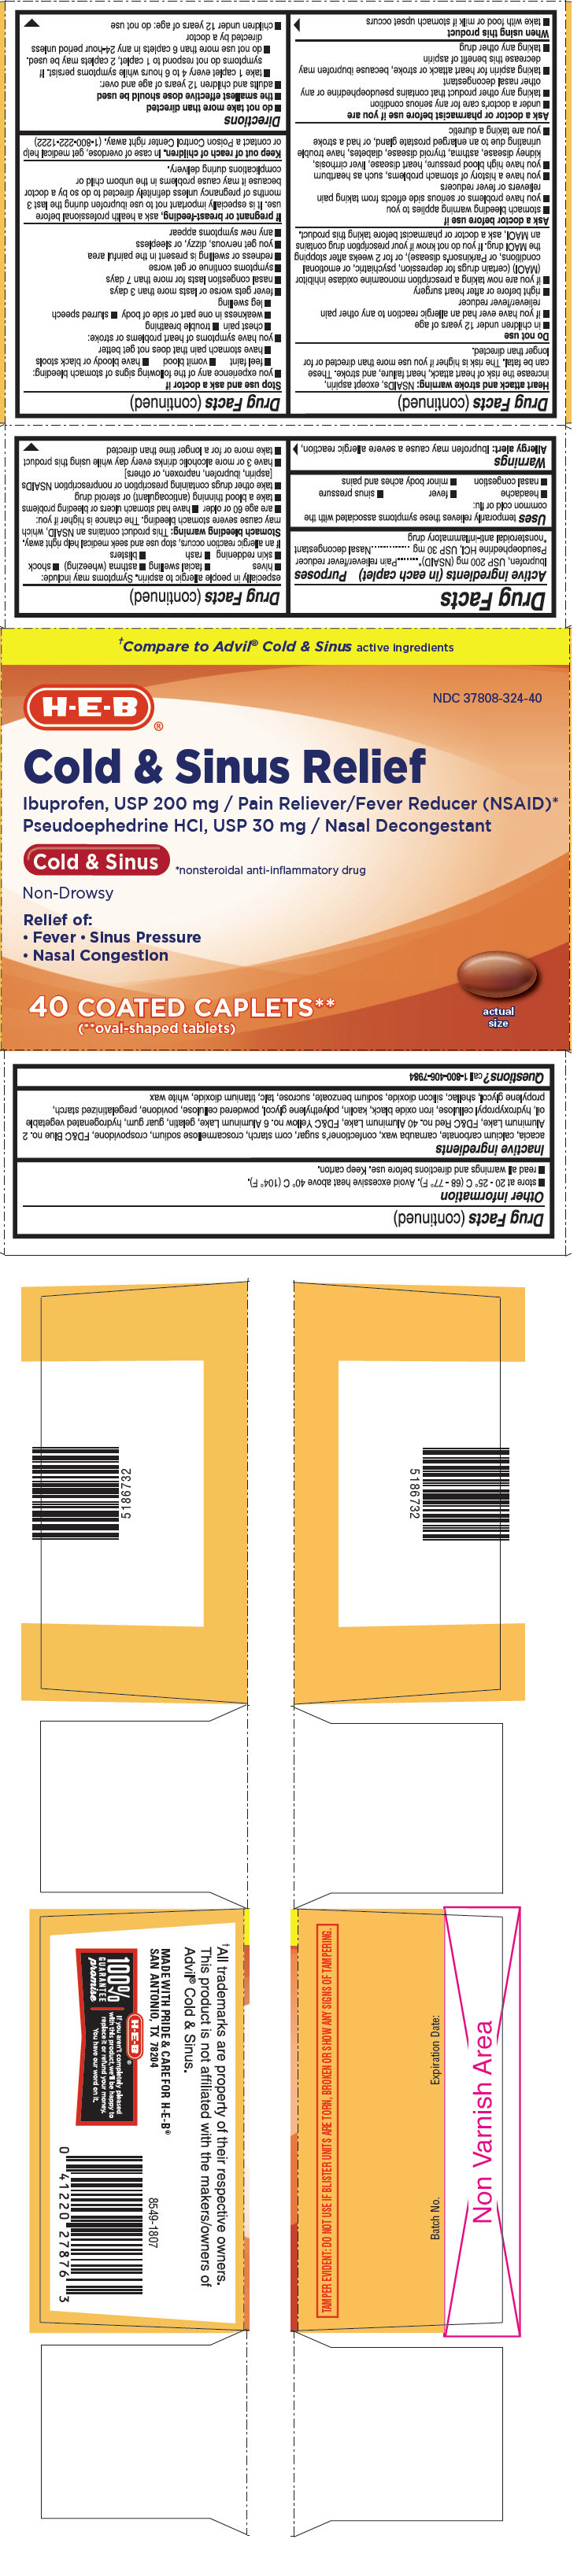 Principal Display Panel - 40 Caplet Blister Pack Carton